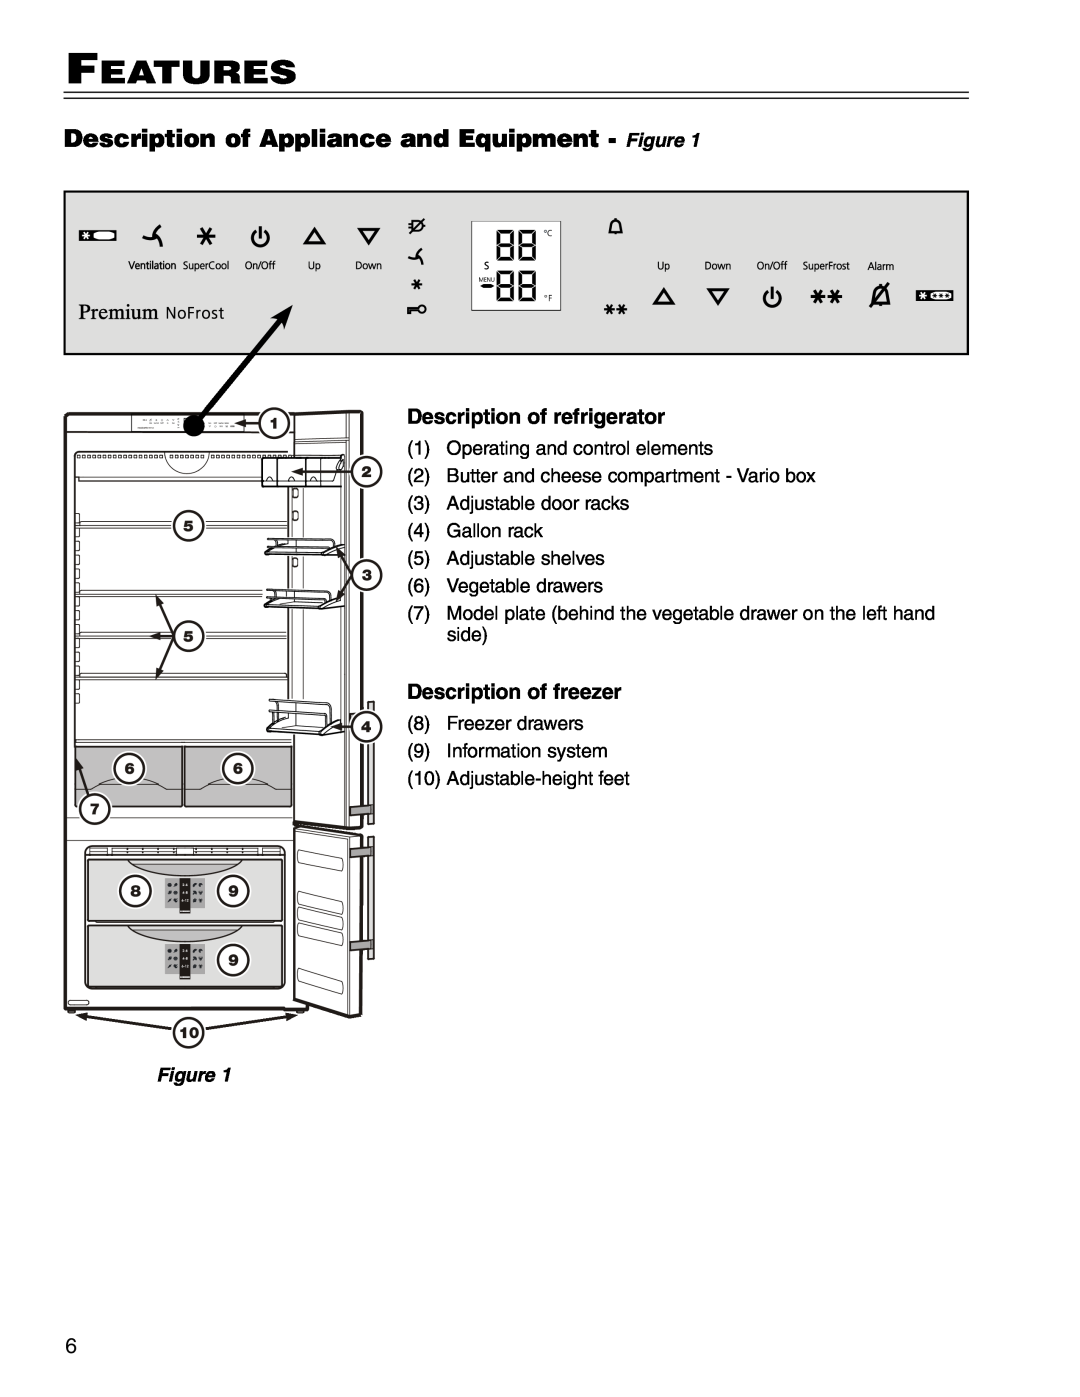 Liebherr CS 1400 7082 663-00 manual Features, Description of Appliance and Equipment - Figure, Description of refrigerator 